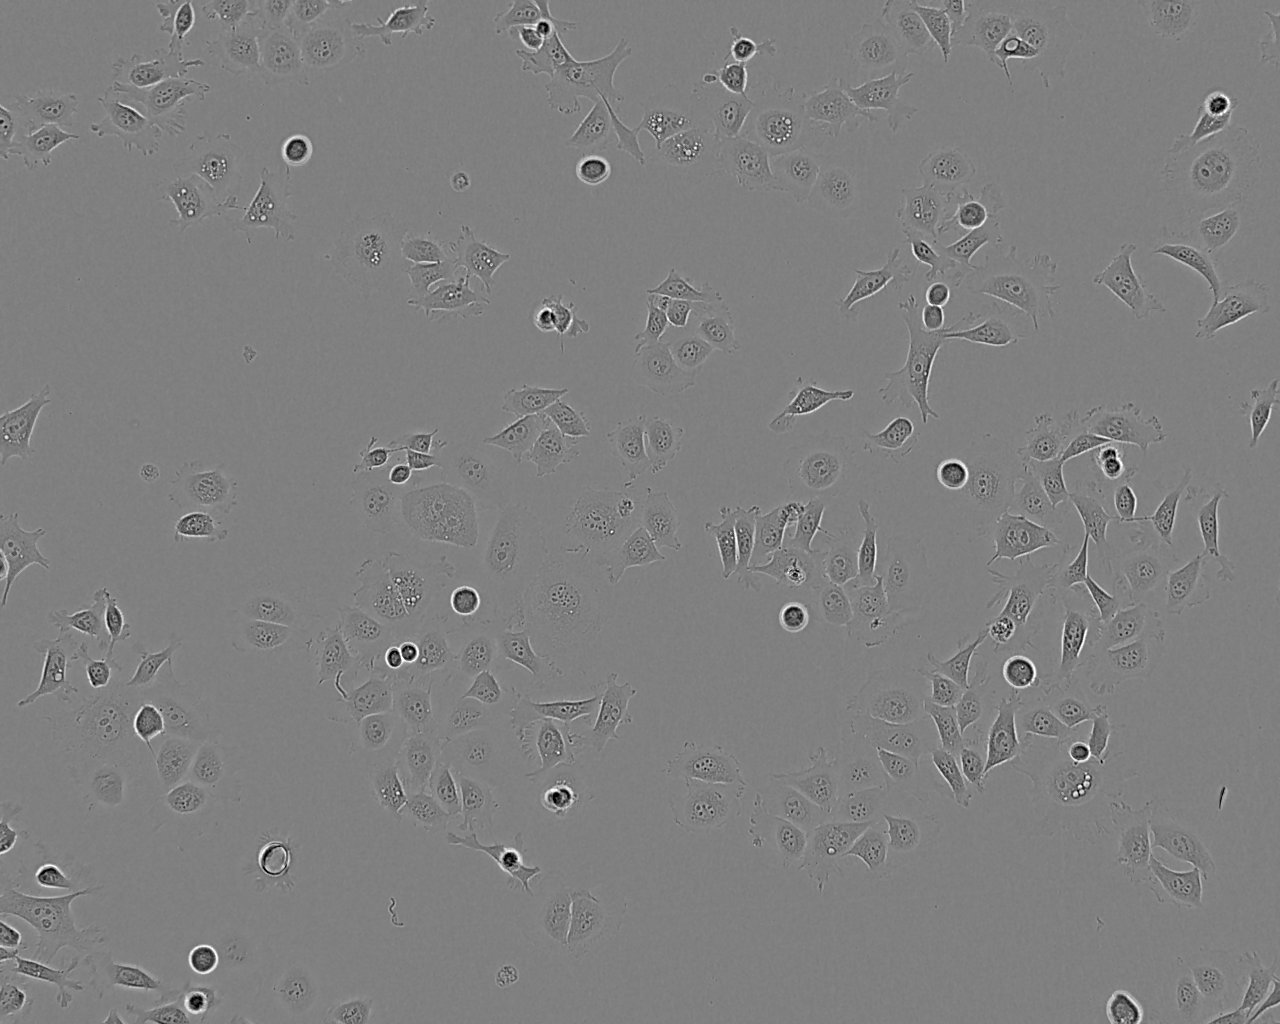 FRhK-4 cell line恒河猴胚肾细胞系,FRhK-4 cell line